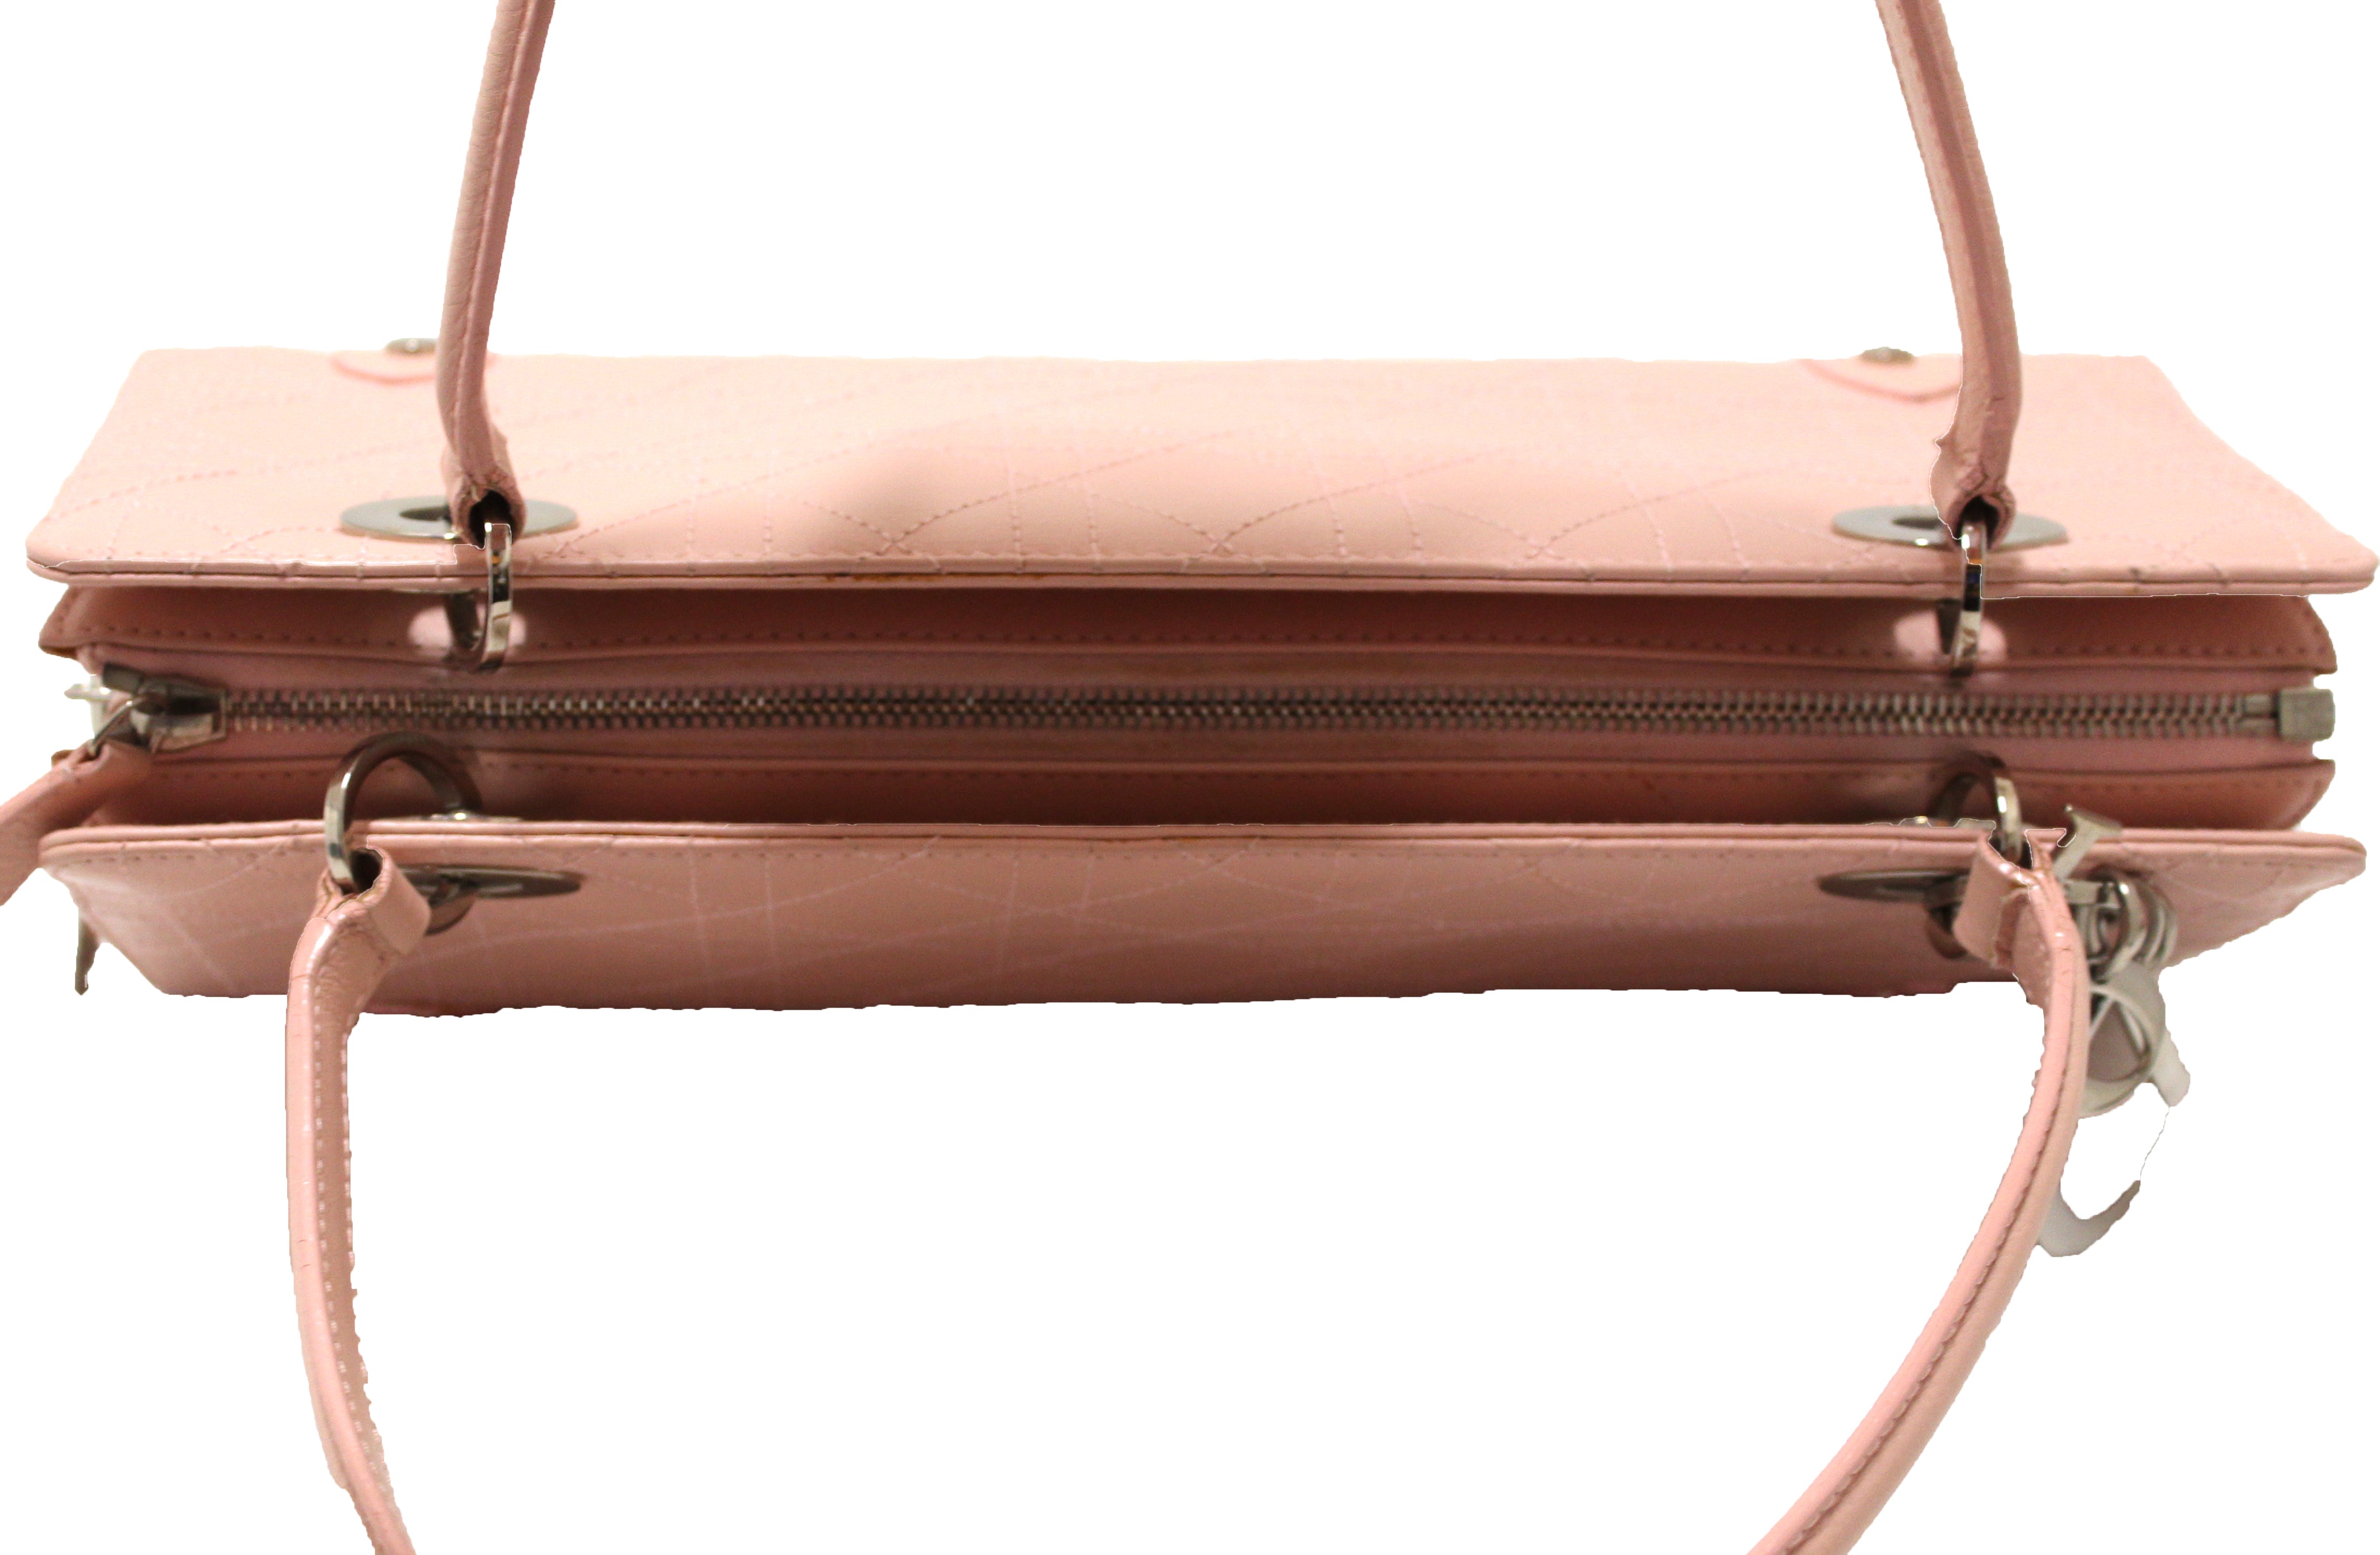 Authentic Christian Dior Pink Calfskin Leather Tote Shoulder Bag